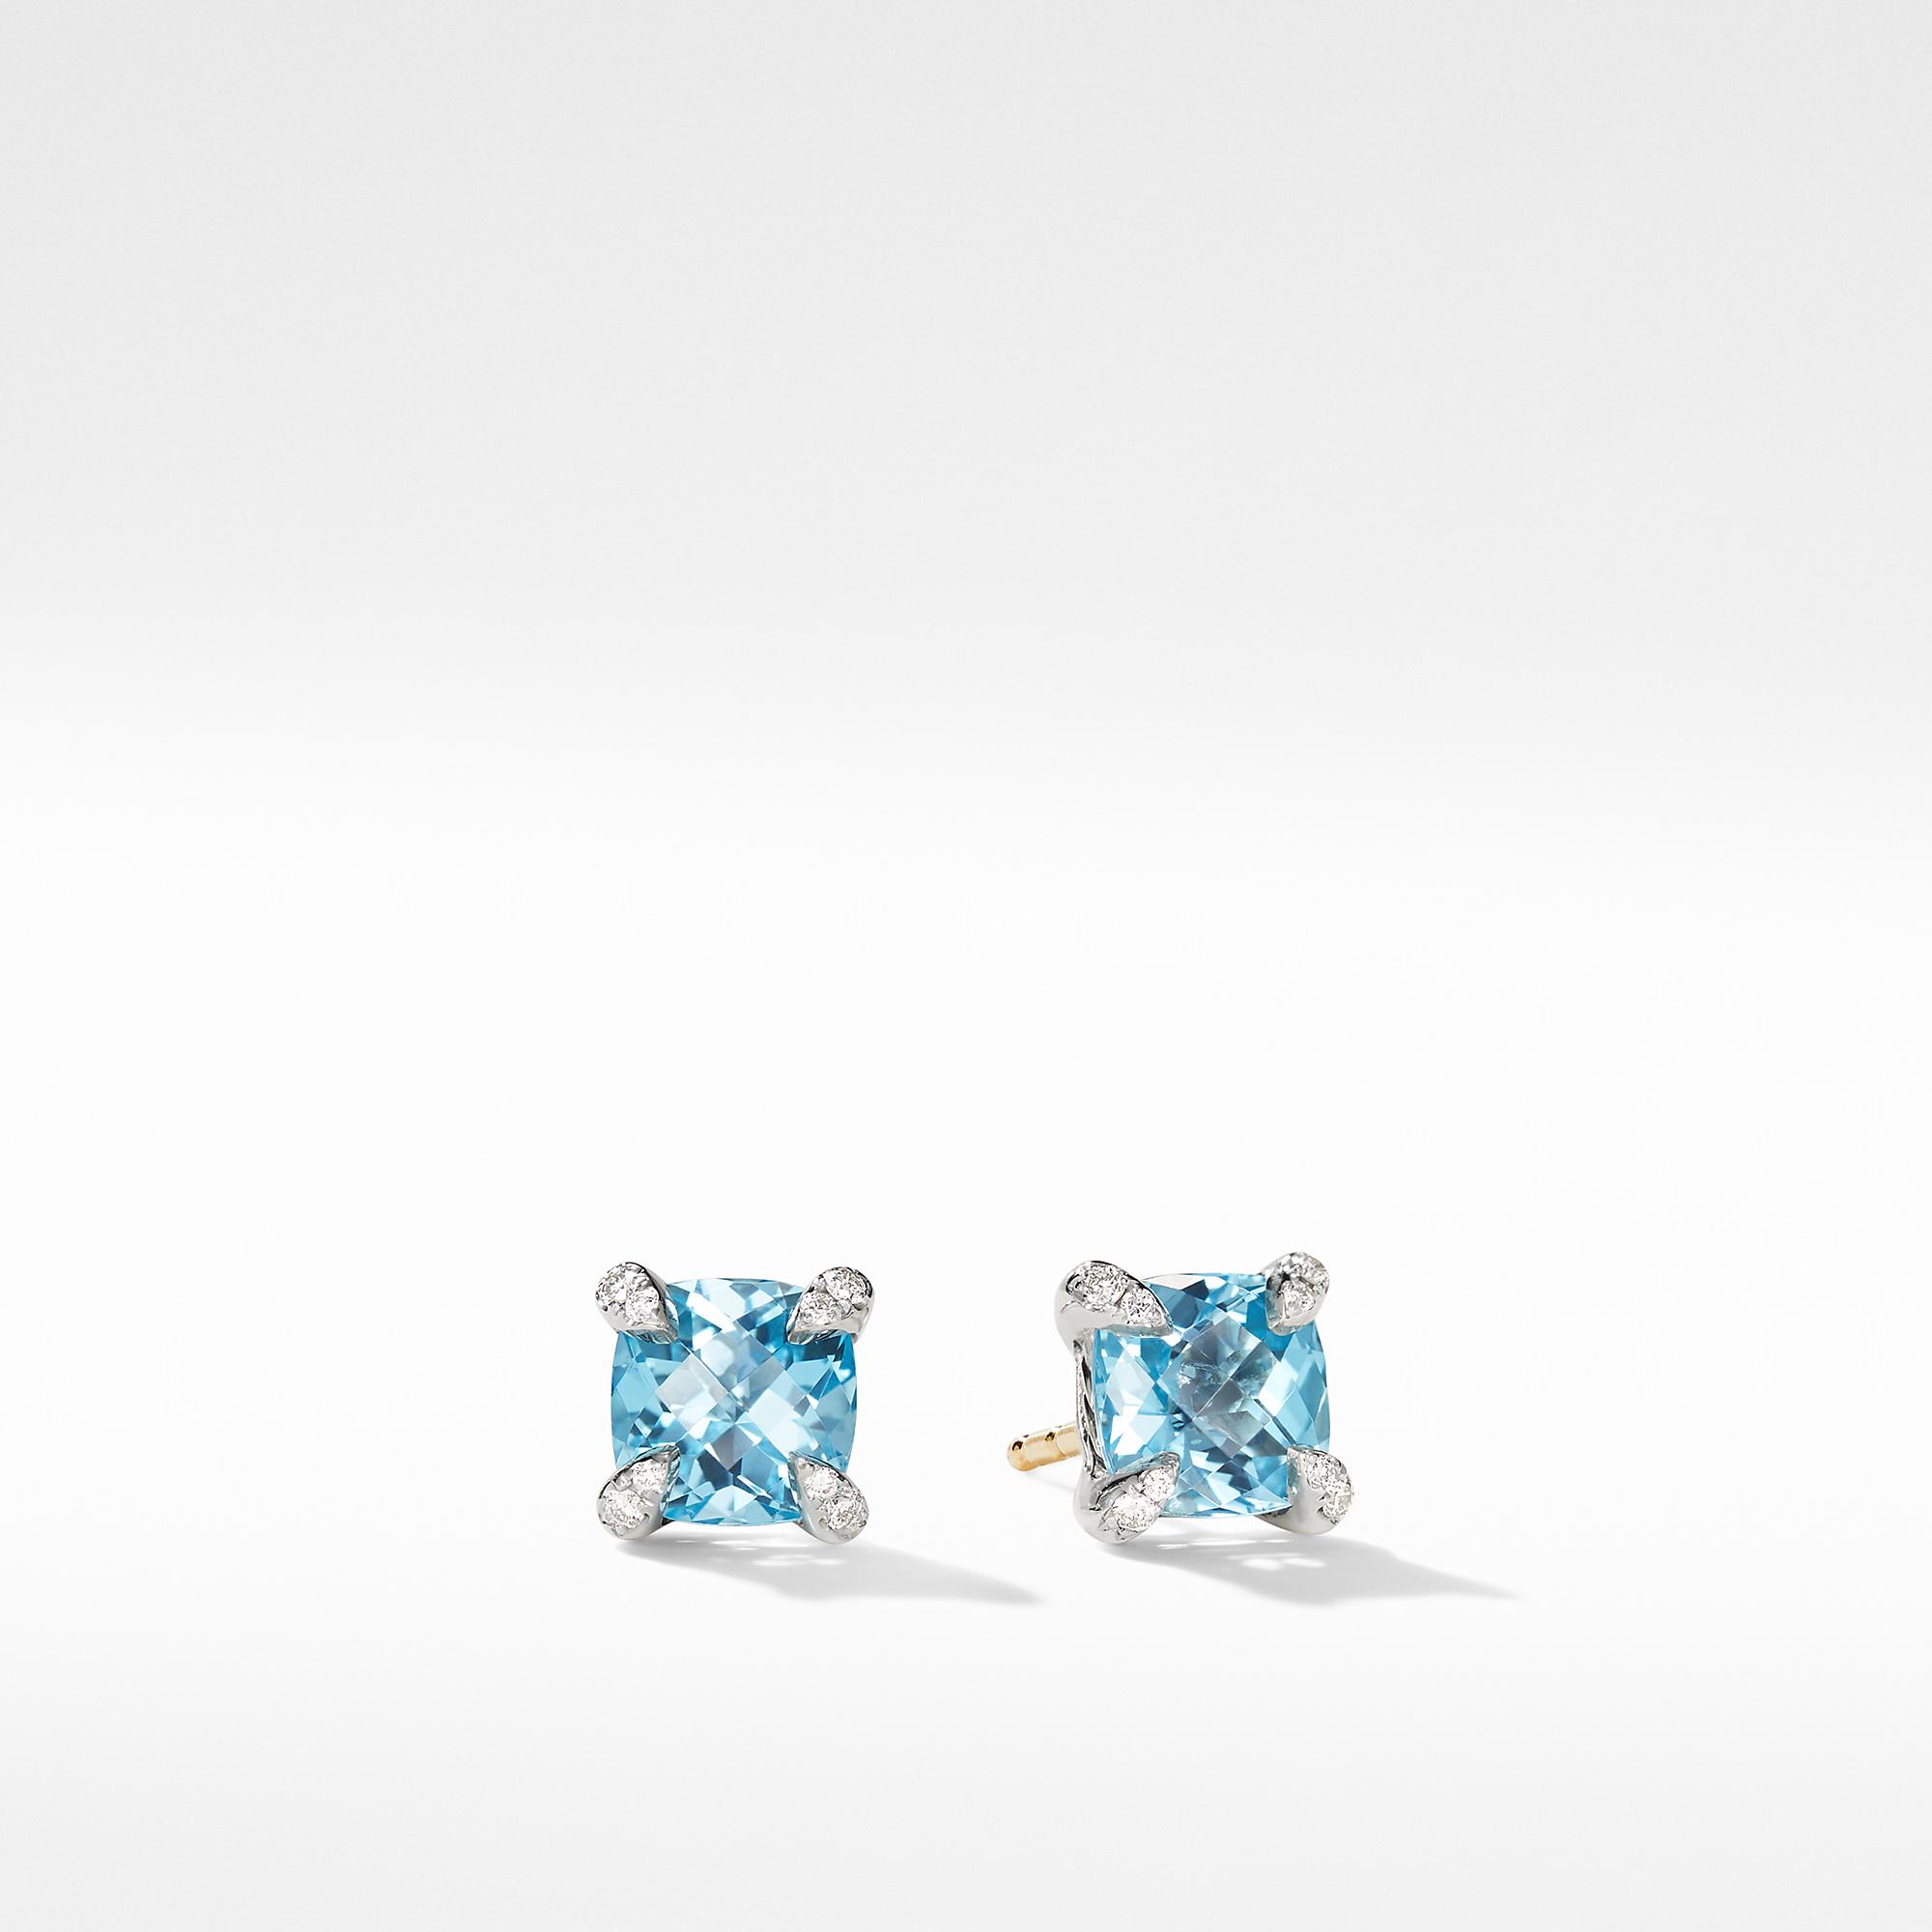 David Yurman Petite Chatelaine Stud Earrings with Blue Topaz and Diamonds